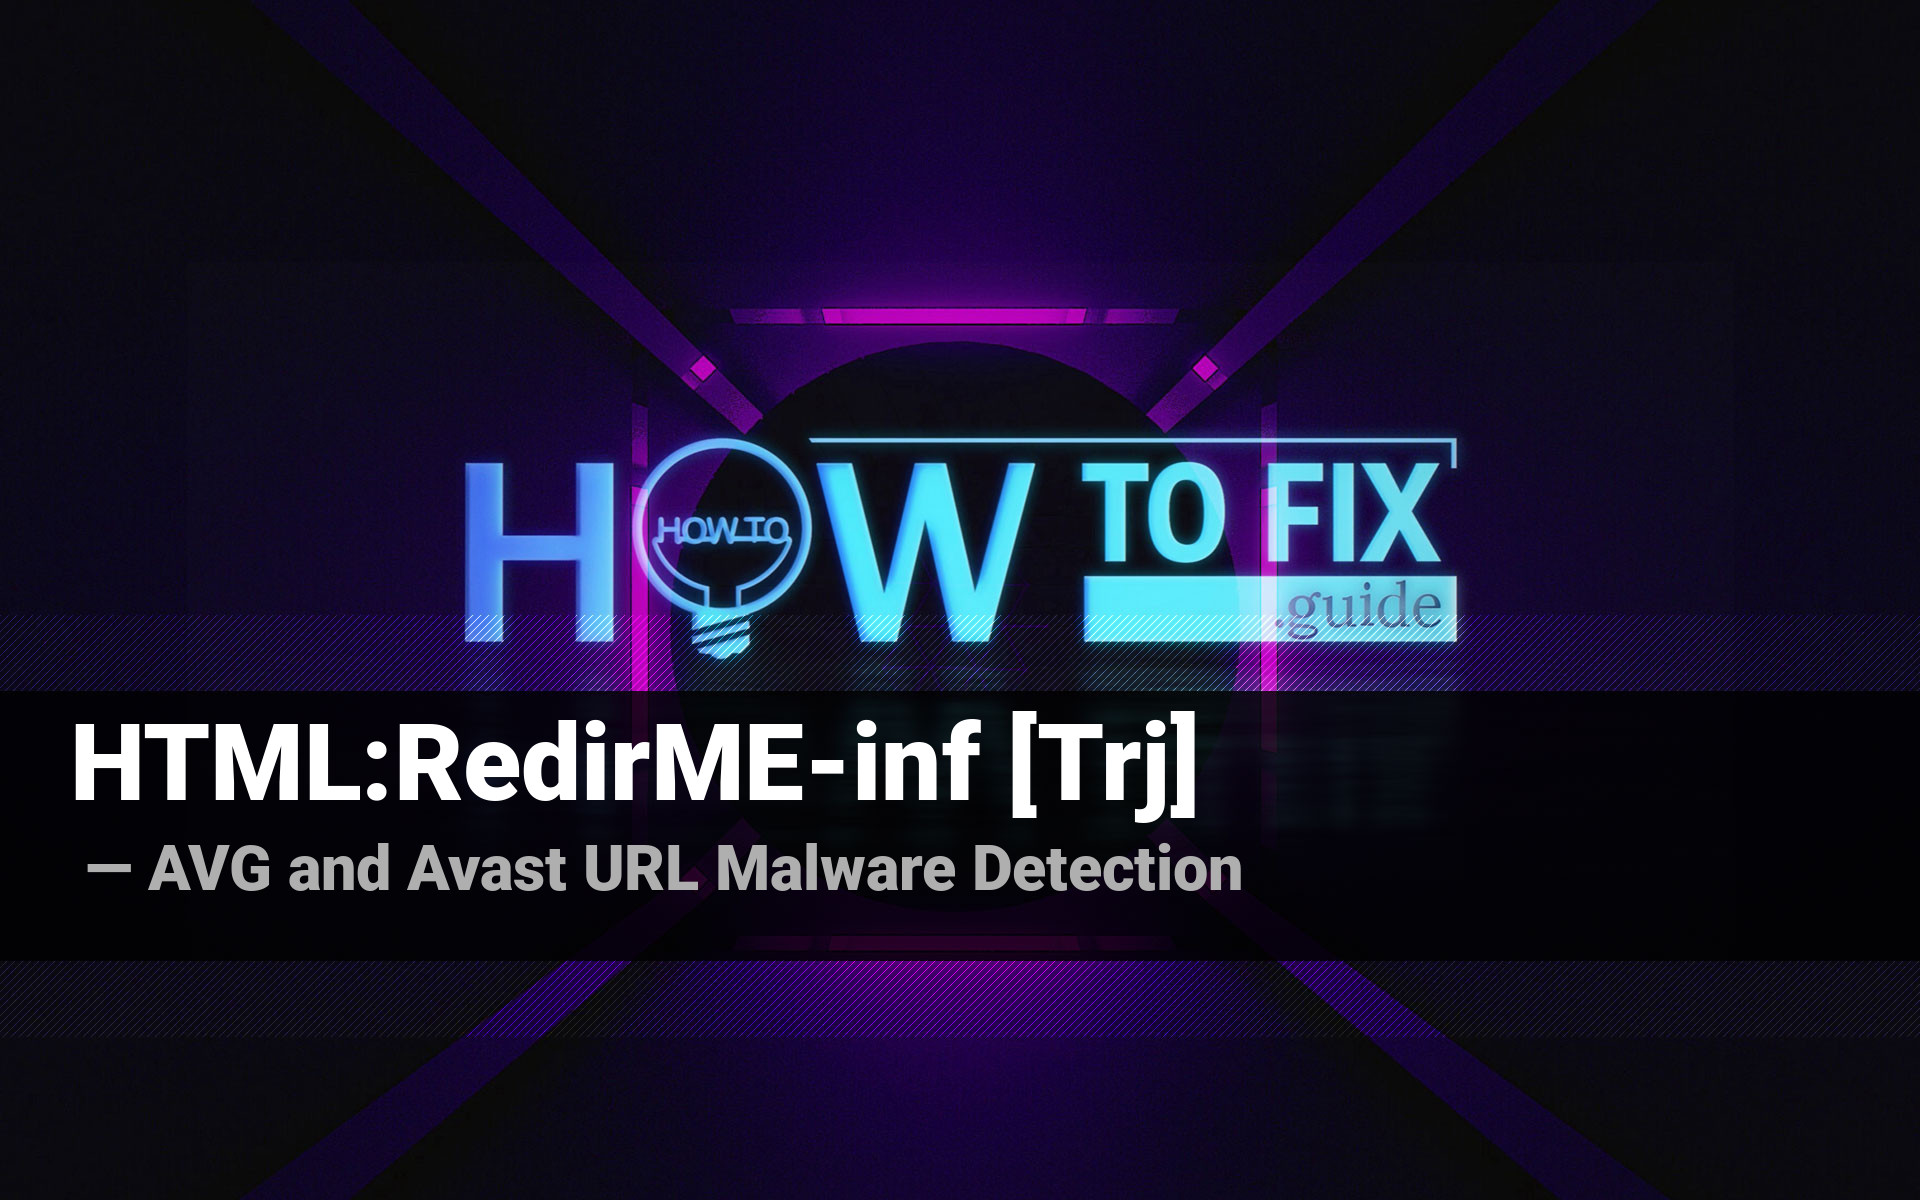 HTML:RedirME-inf [Trj] virus. How to Remove Trojan Virus?